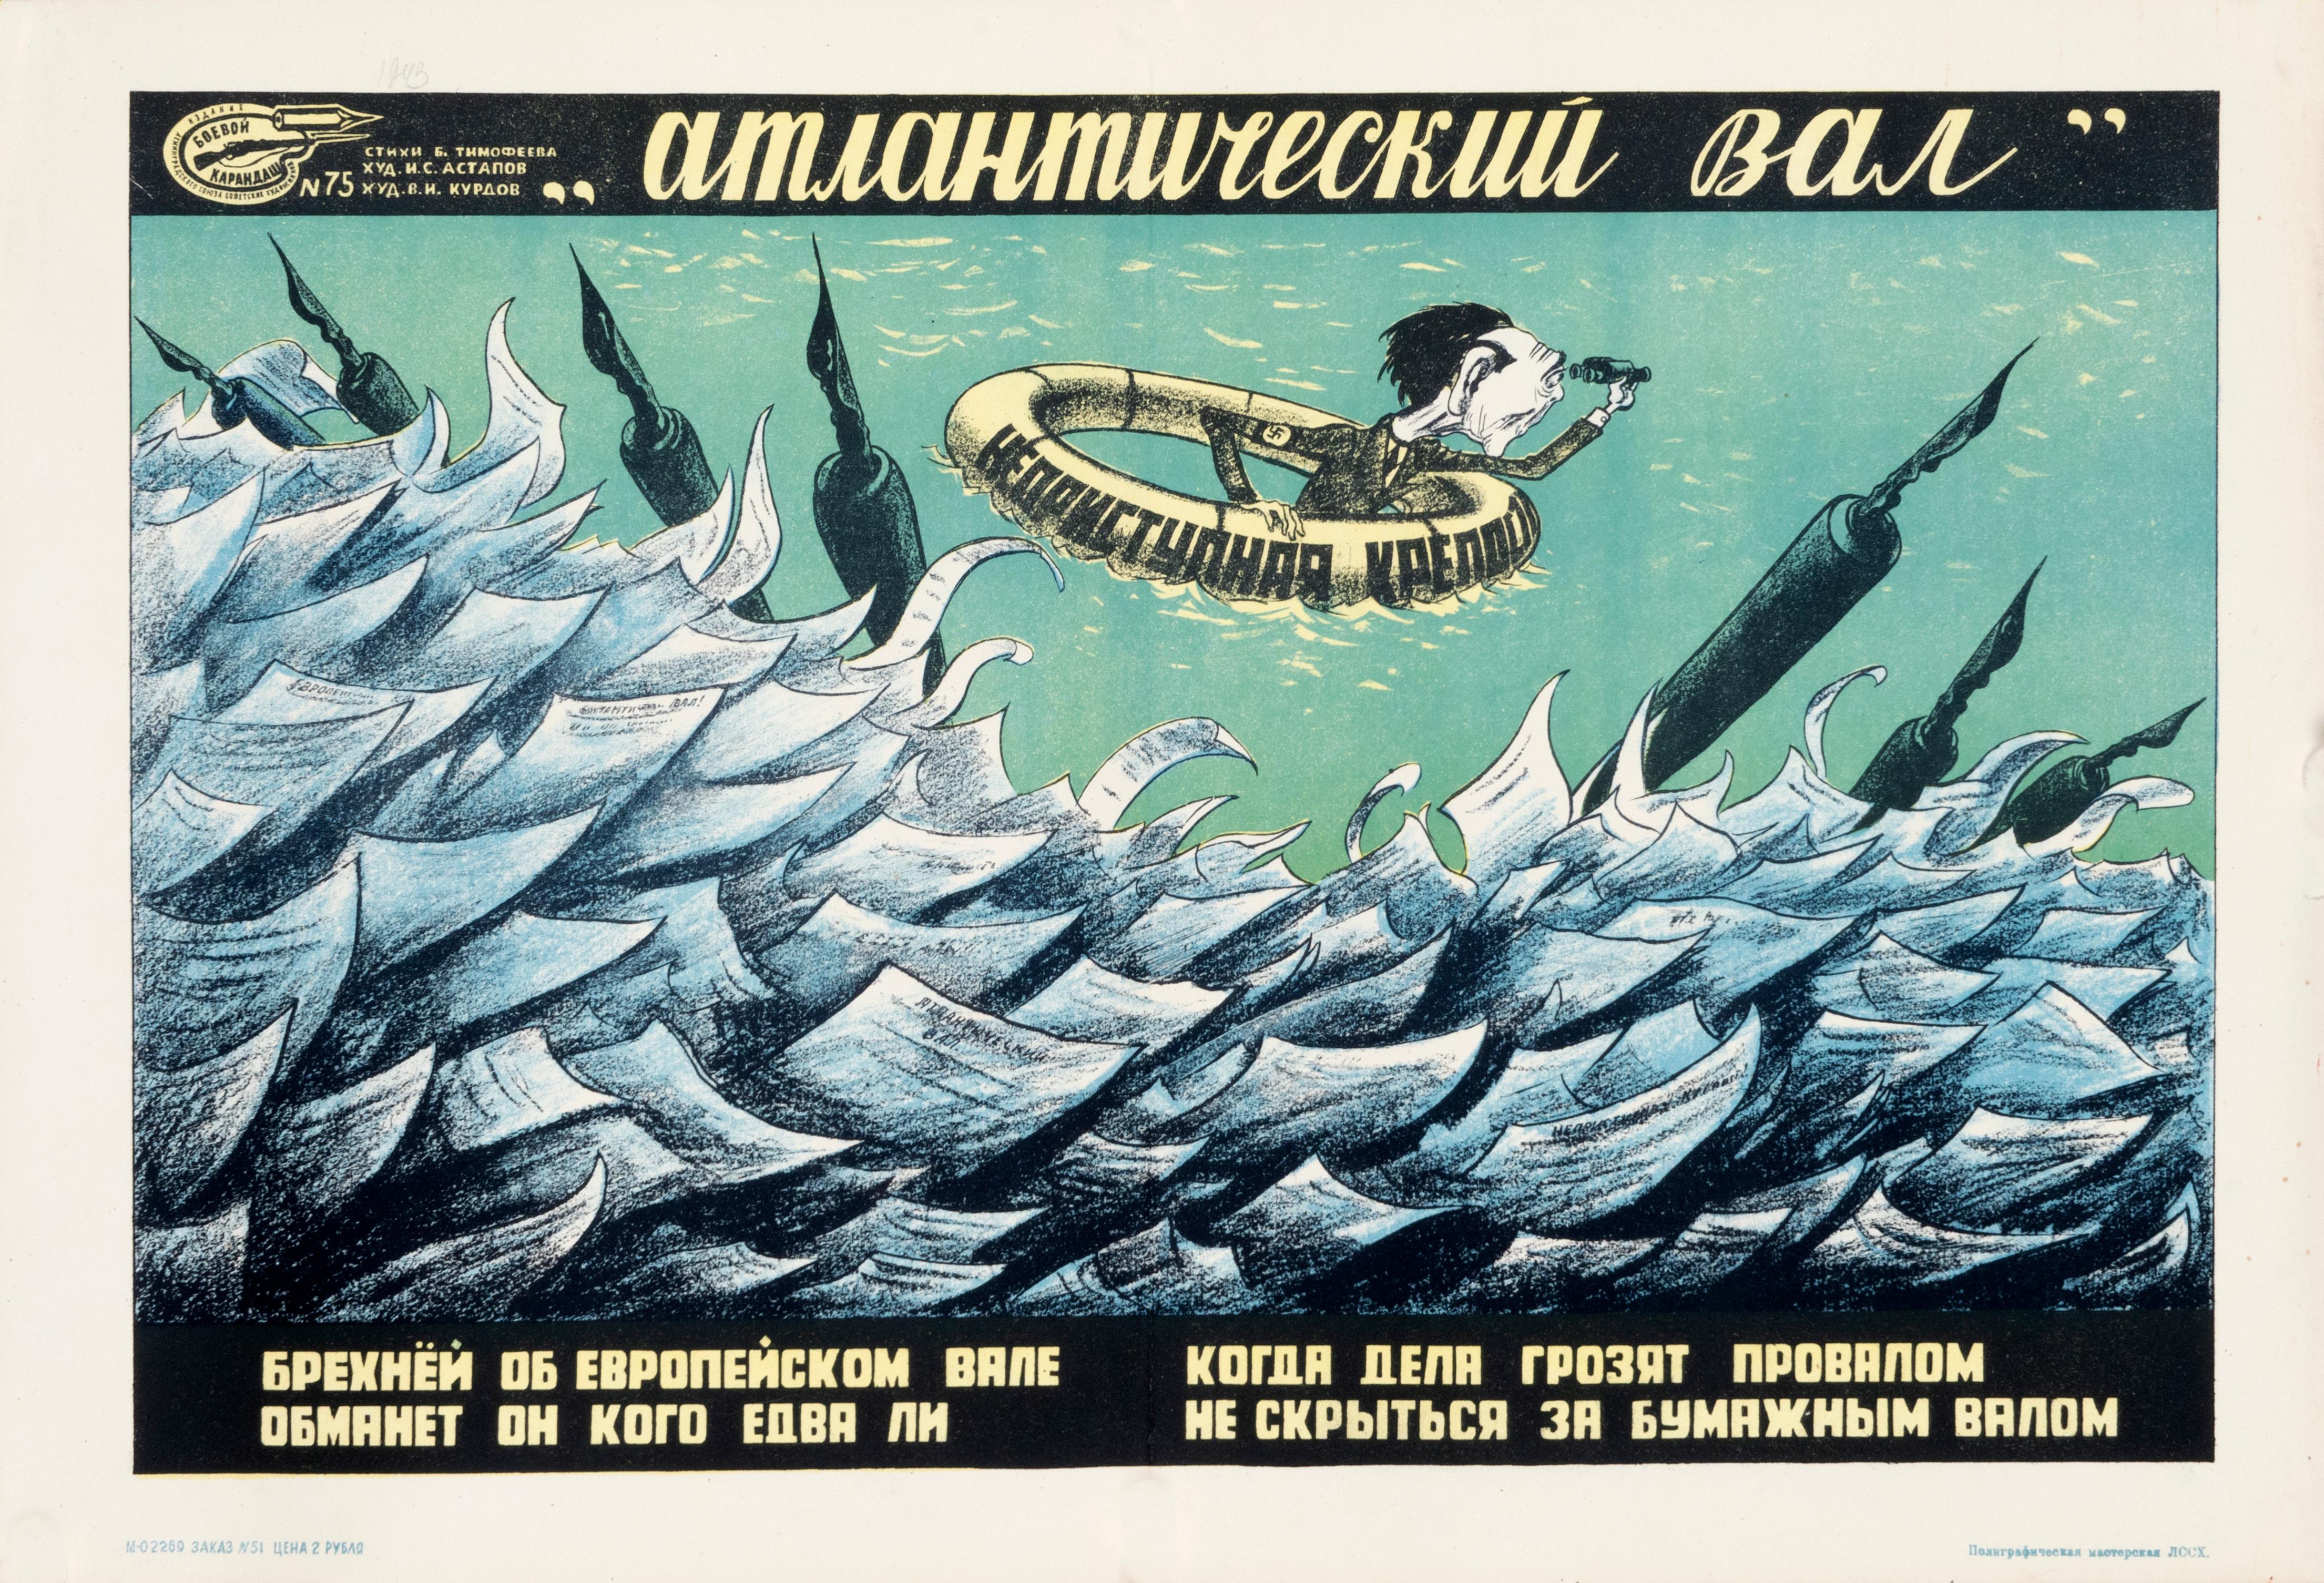 "The Atlantic Wall" Original Vintage Soviet WW2 Propaganda Poster 1940s - Print by Astapov and Kurdov